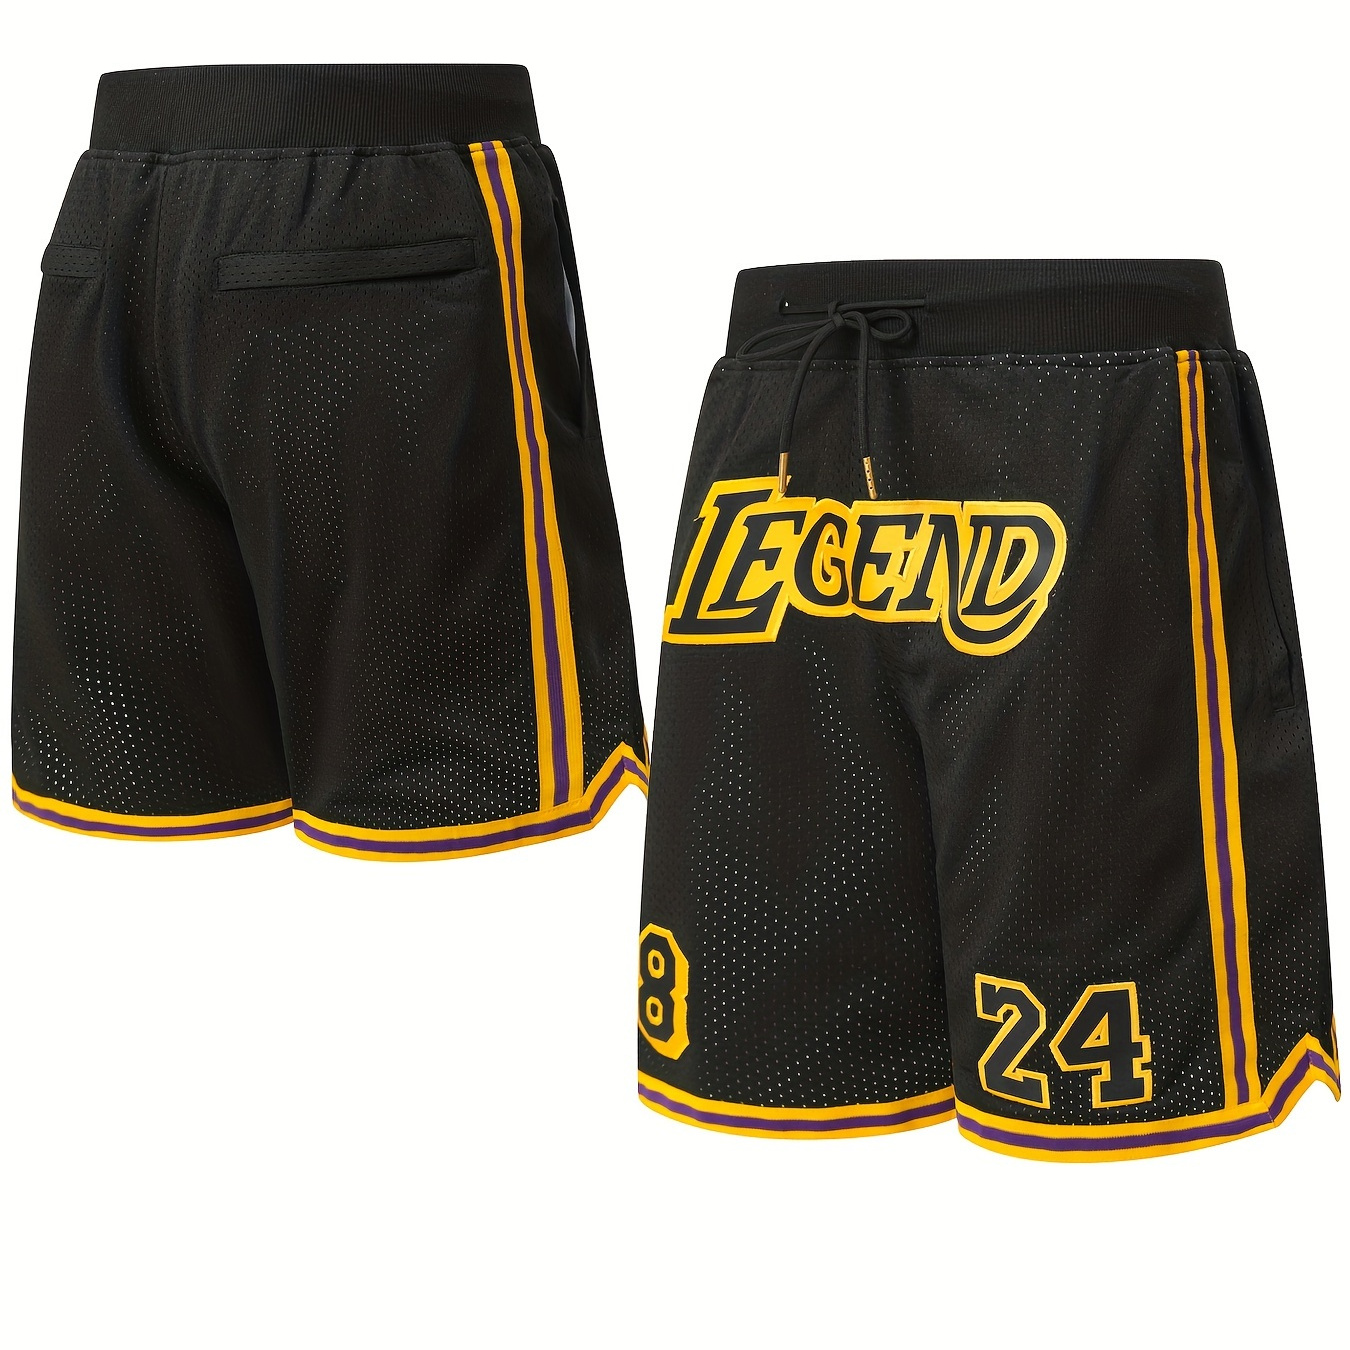 

Men's Black #8-24 Legend Design Basketball Shorts, Casual Fashion Breathable Sports Style Shorts, Athletic Wear